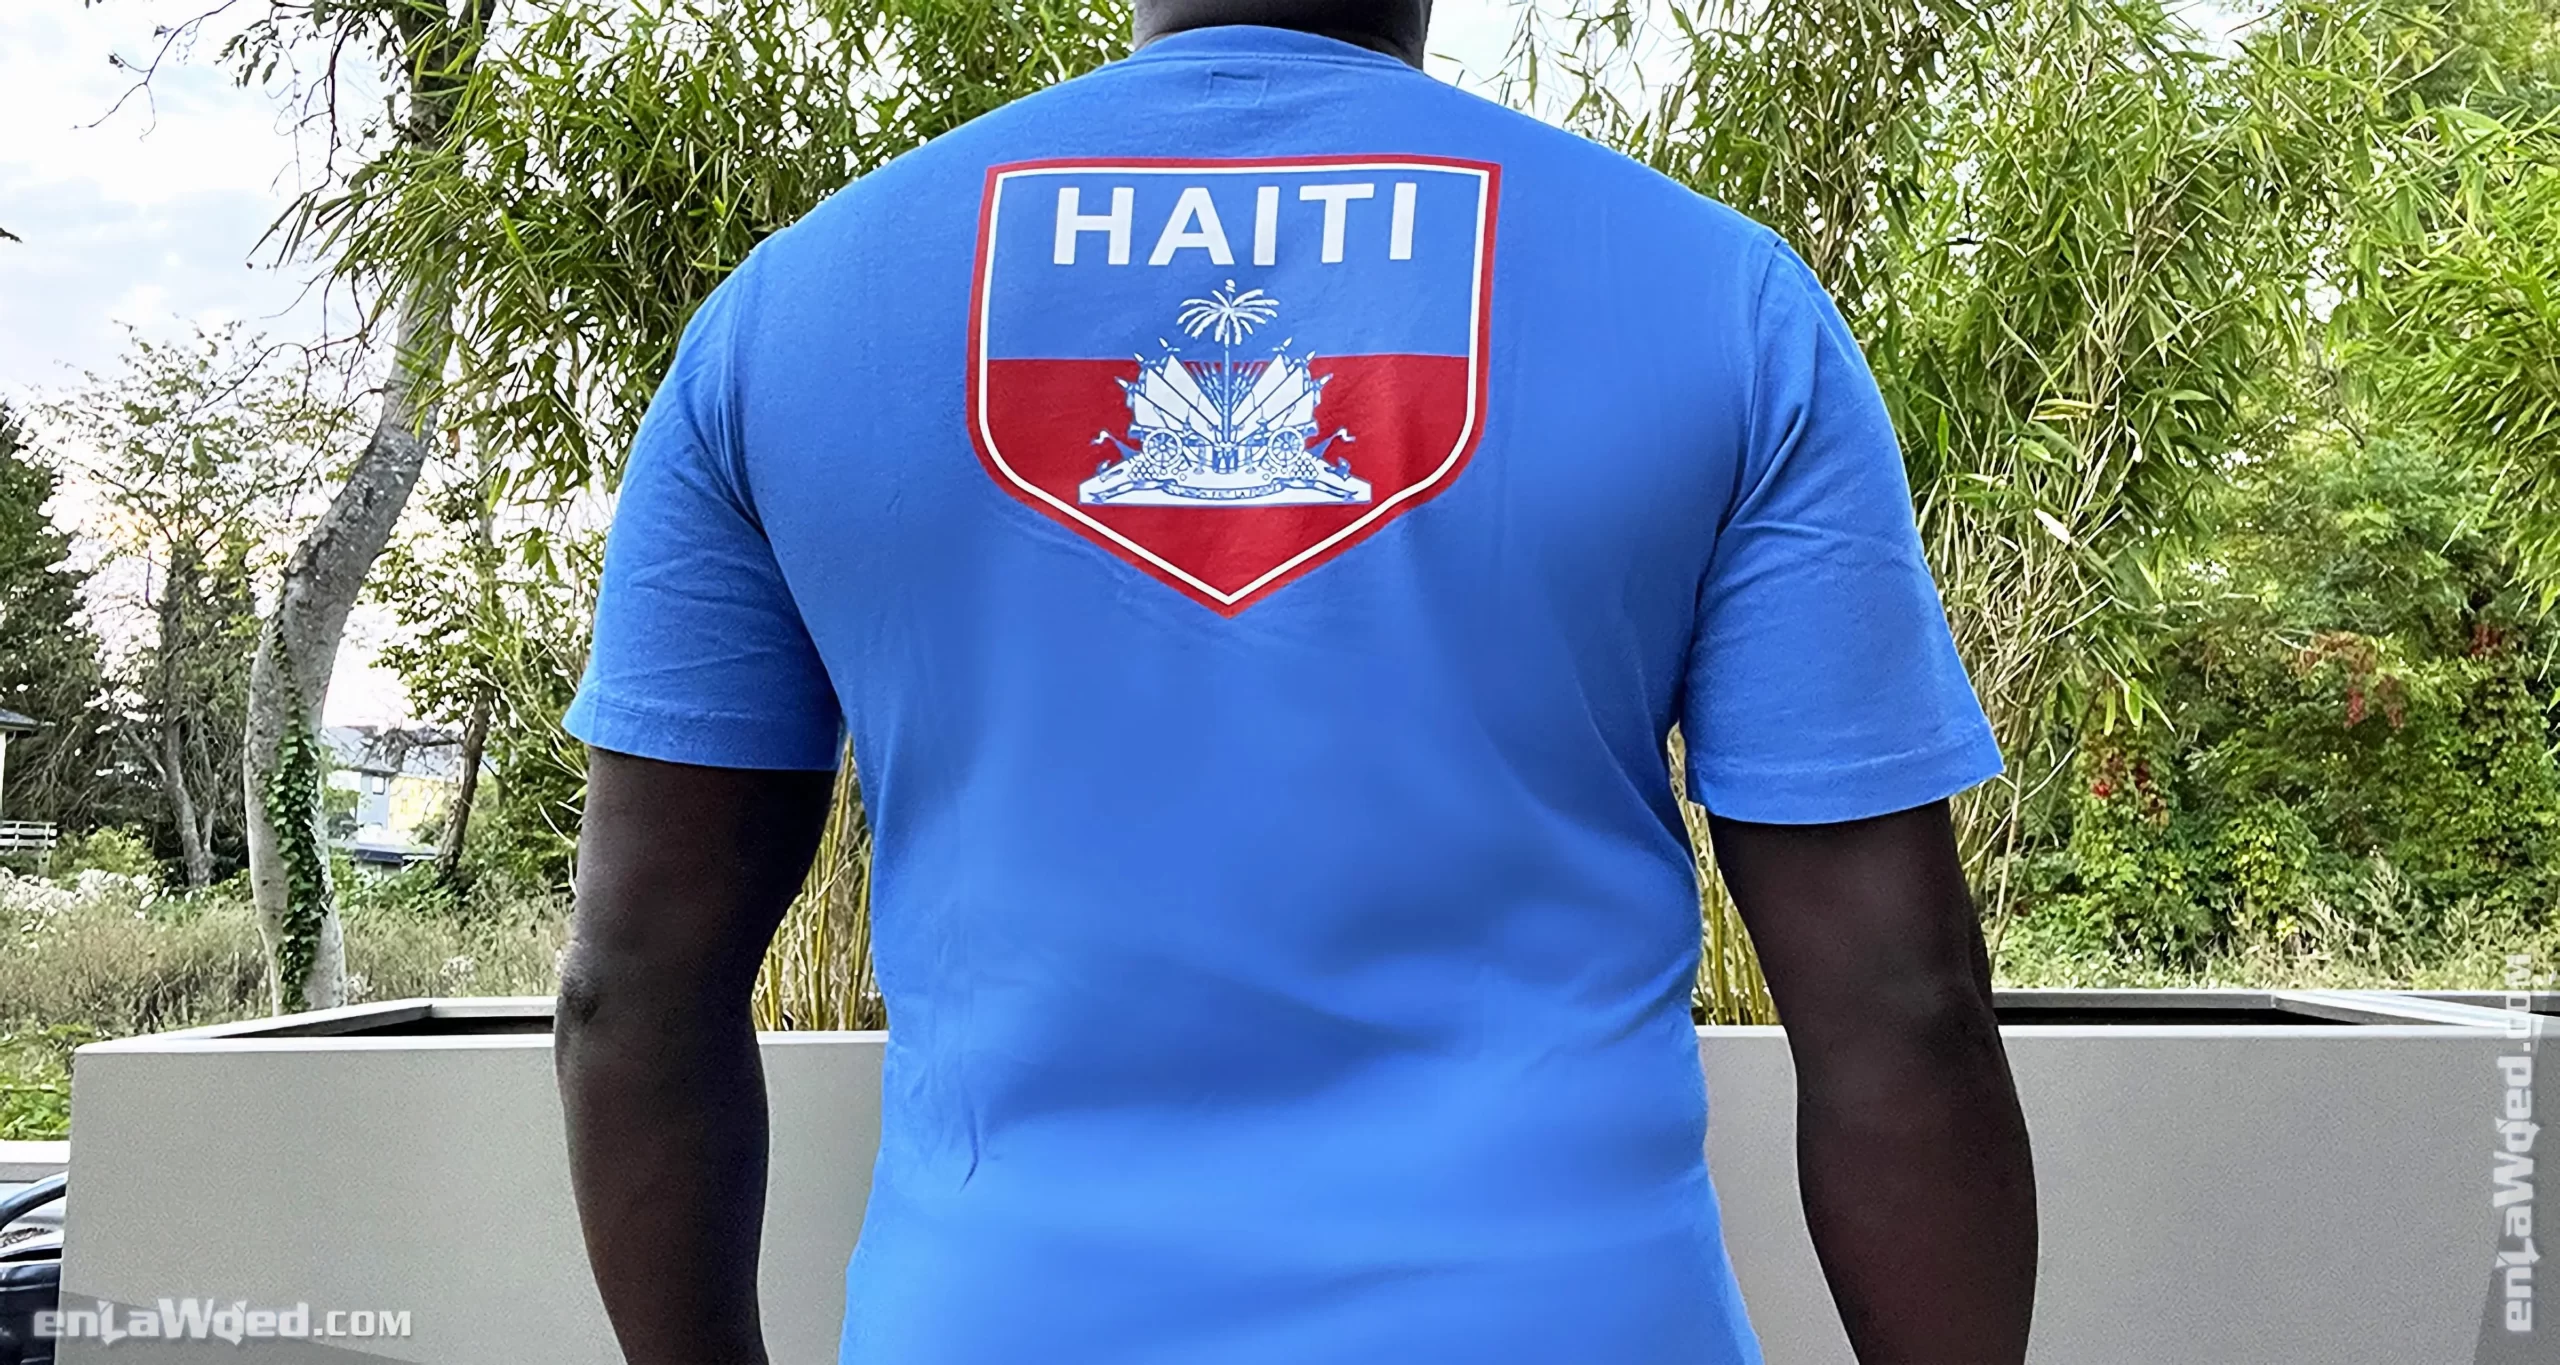 Men’s 2007 Haiti T-Shirt by Adidas Originals: Uplifted (EnLawded.com file #lp1n83yt126195roe2p4jshxh)